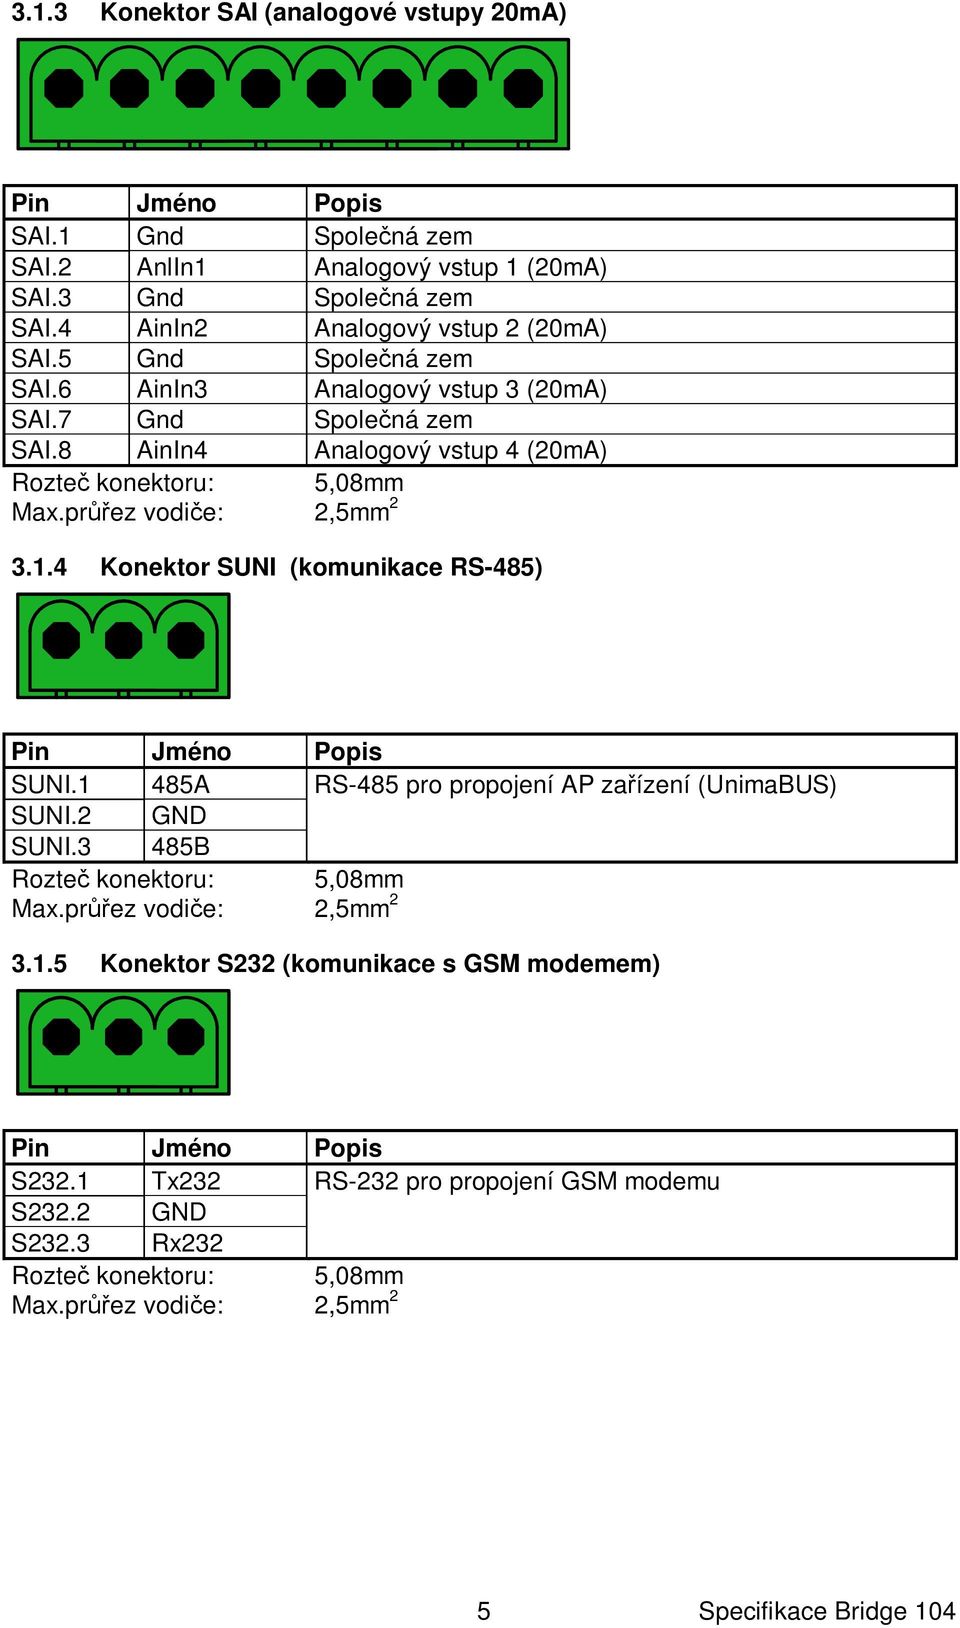 8 AinIn4 Analogový vstup 4 (20mA) Rozte konektoru: 5,08mm Max.pr ez vodi e: 2,5mm 2 3.1.4 Konektor SUNI (komunikace RS-485) Pin Jméno Popis SUNI.